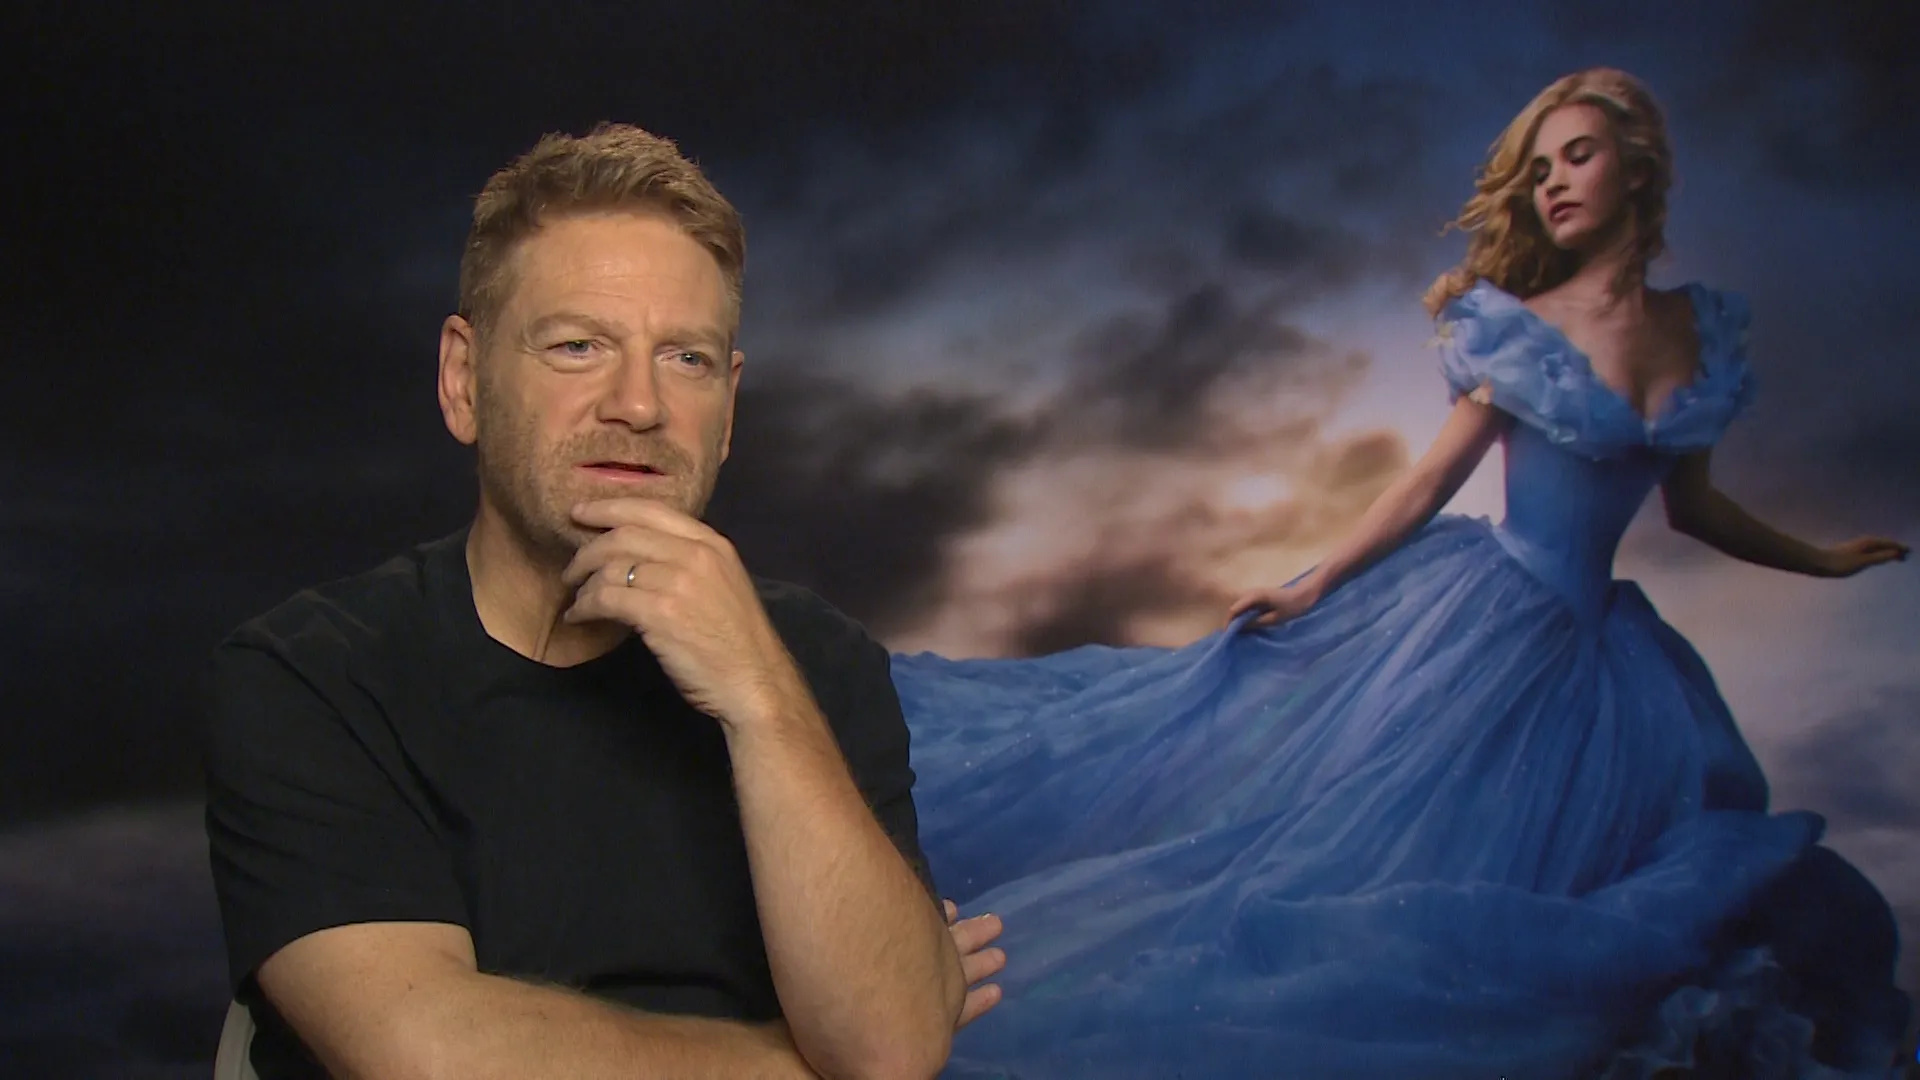 Kenneth Branagh: Directed a 2015 romantic fantasy film, Cinderella. 1920x1080 Full HD Wallpaper.